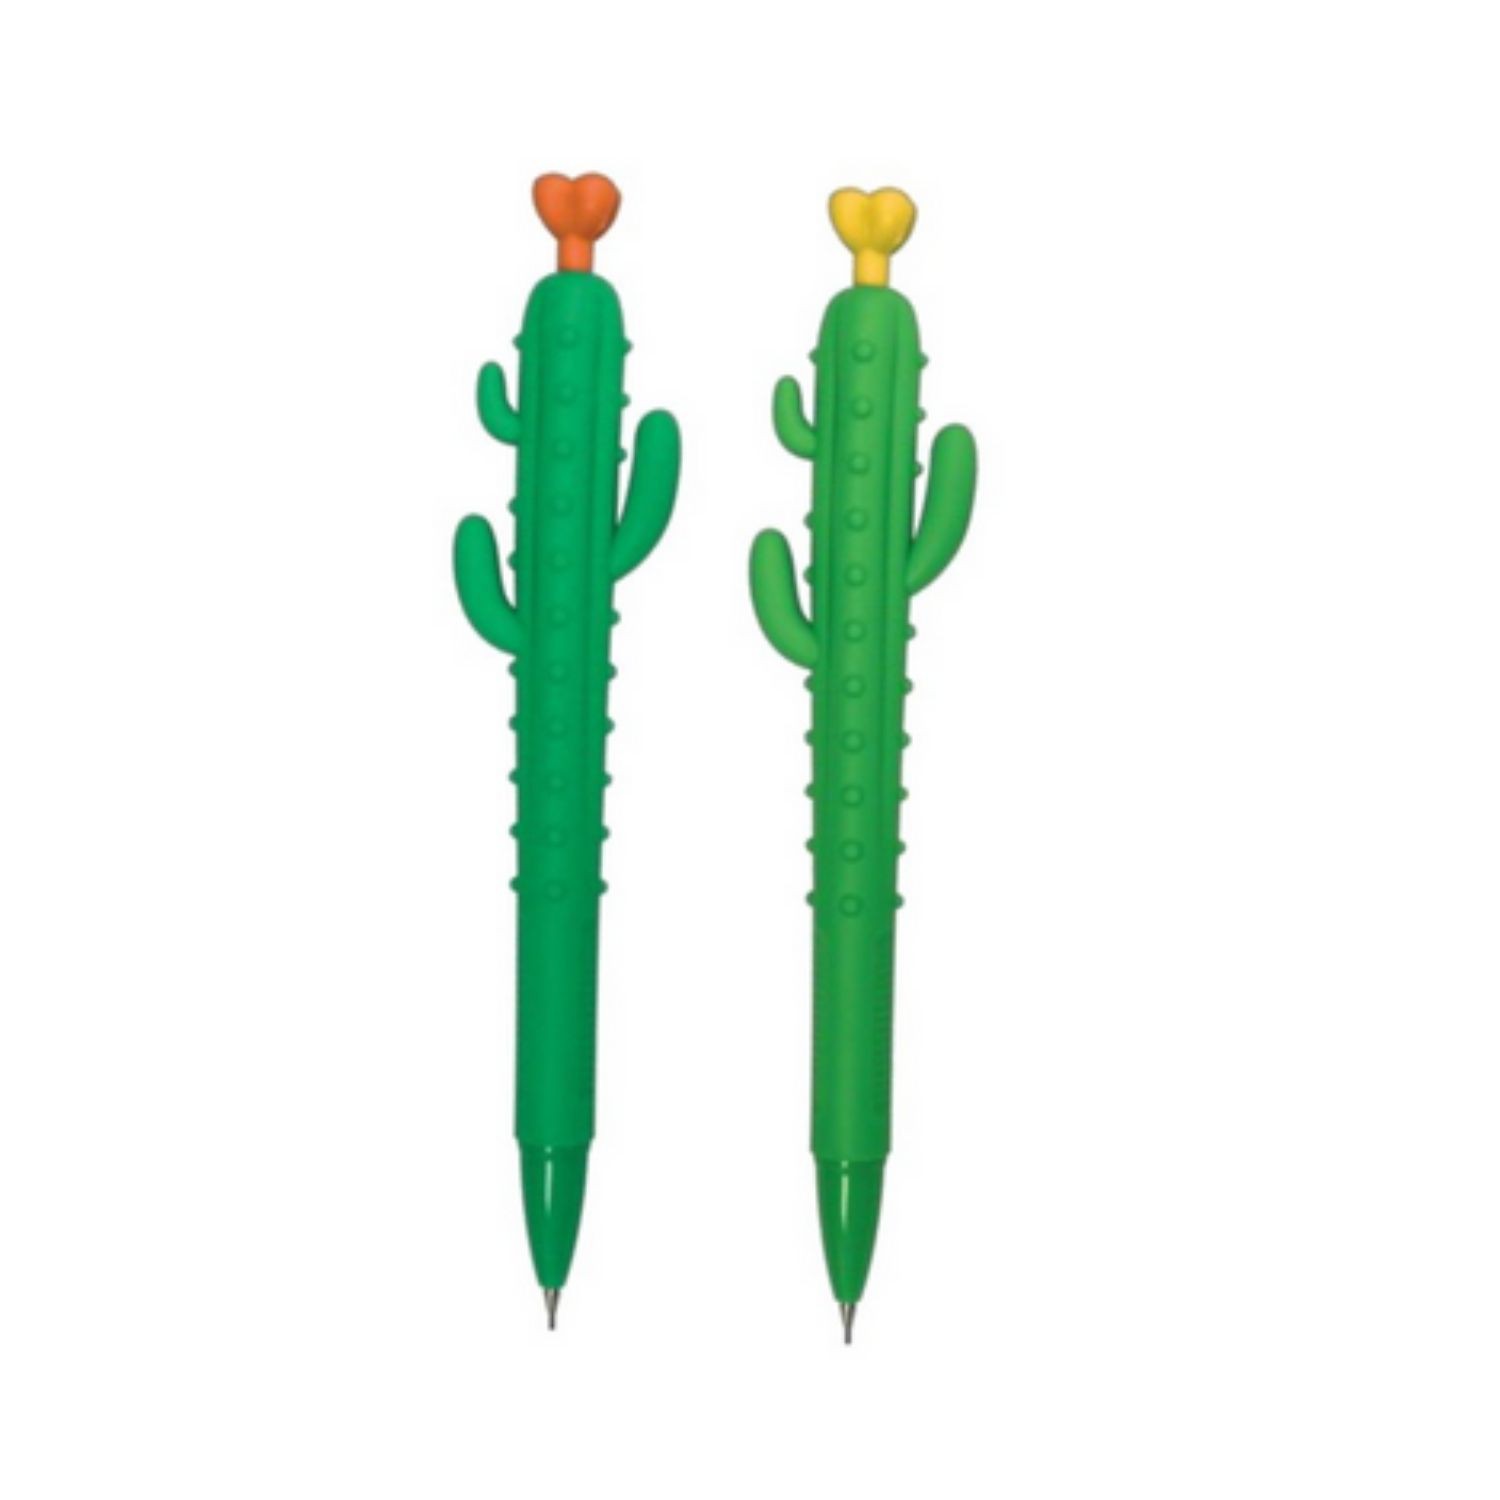 Lapiseira 0.7mm TILIBRA Cactus